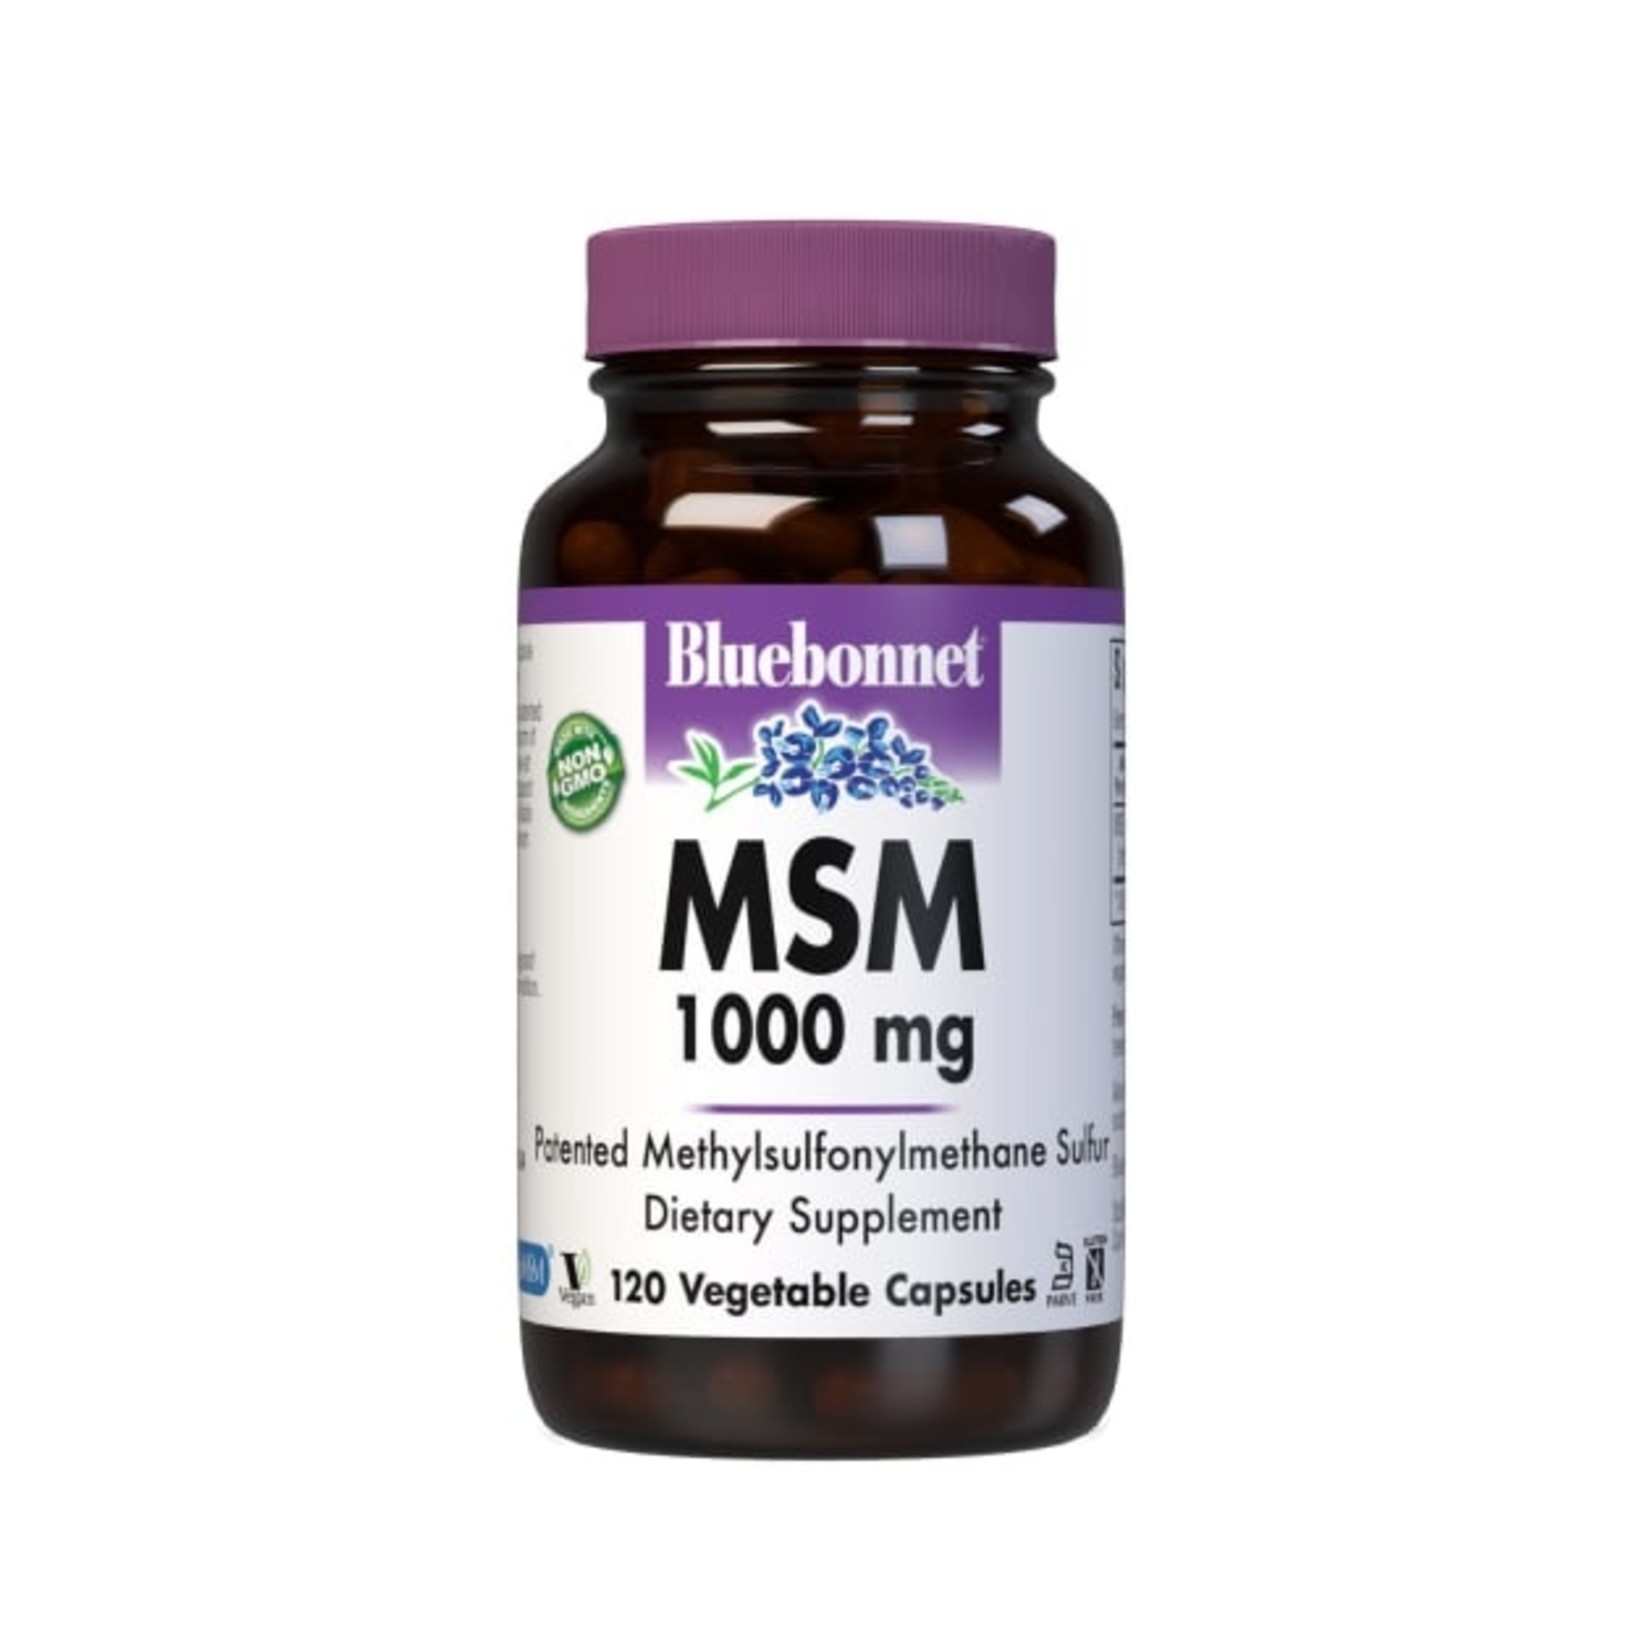 Bluebonnet Bluebonnet - MSM 1000 mg - 120 Veg Capsules